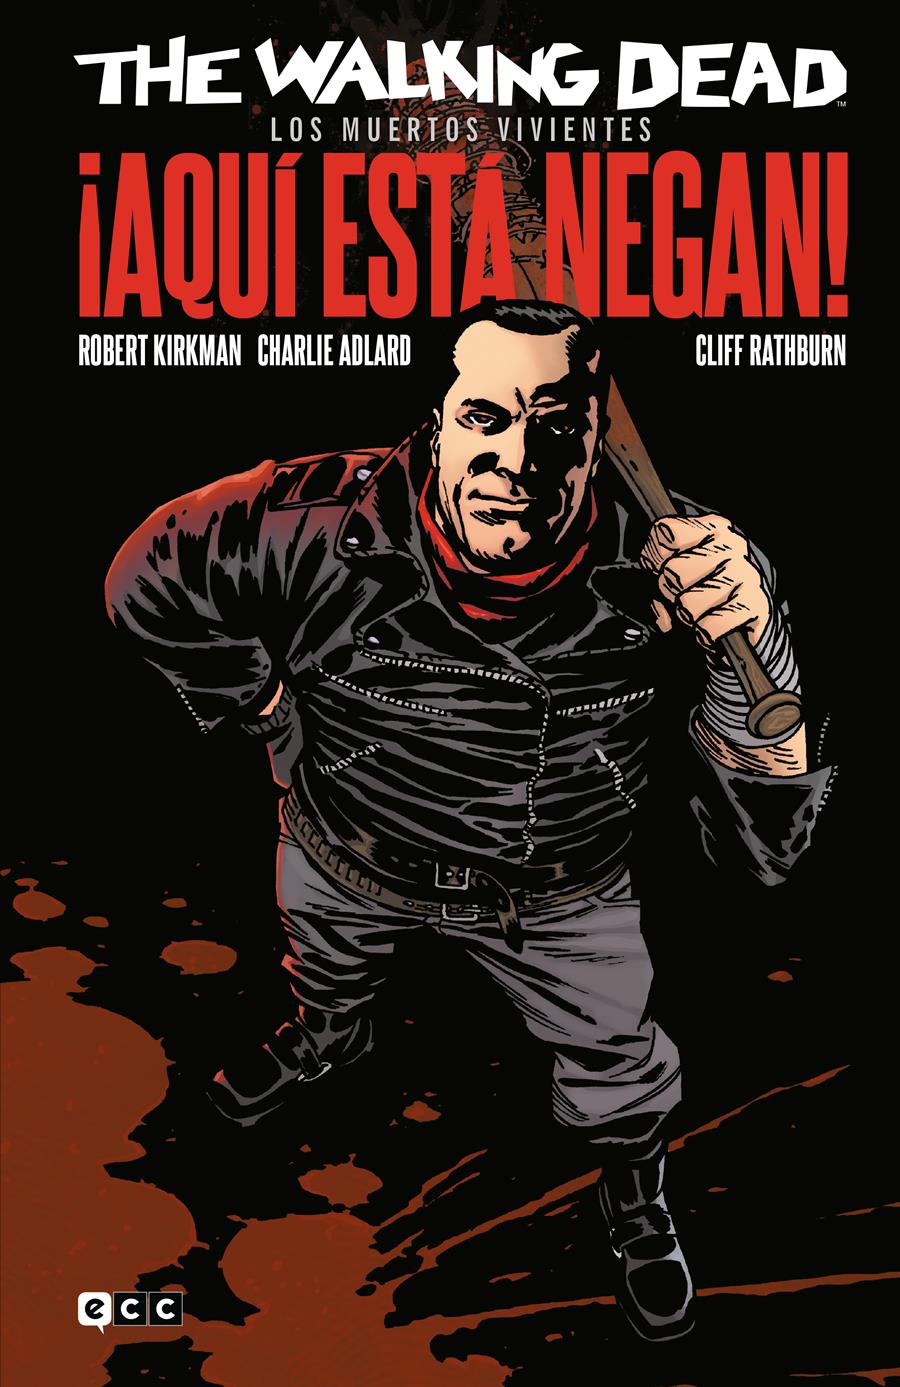 The Walking Dead (Los muertos vivientes): ¡Aquí está Negan! | N0222-ECC42 | Charlie Adlard / Robert Kirkman | Terra de Còmic - Tu tienda de cómics online especializada en cómics, manga y merchandising